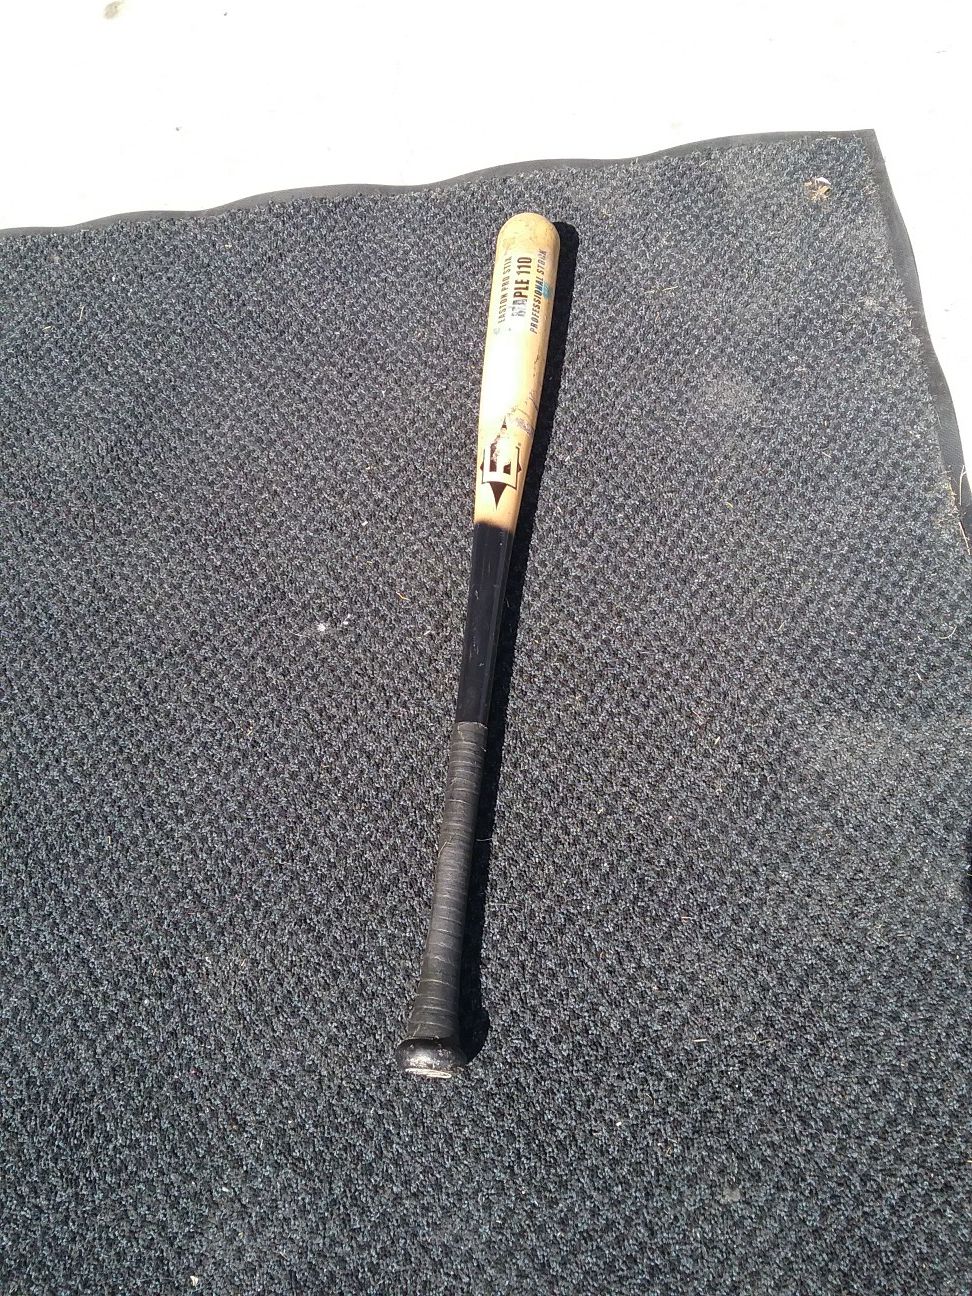 Easton Wood Professional pro stock baseball bat